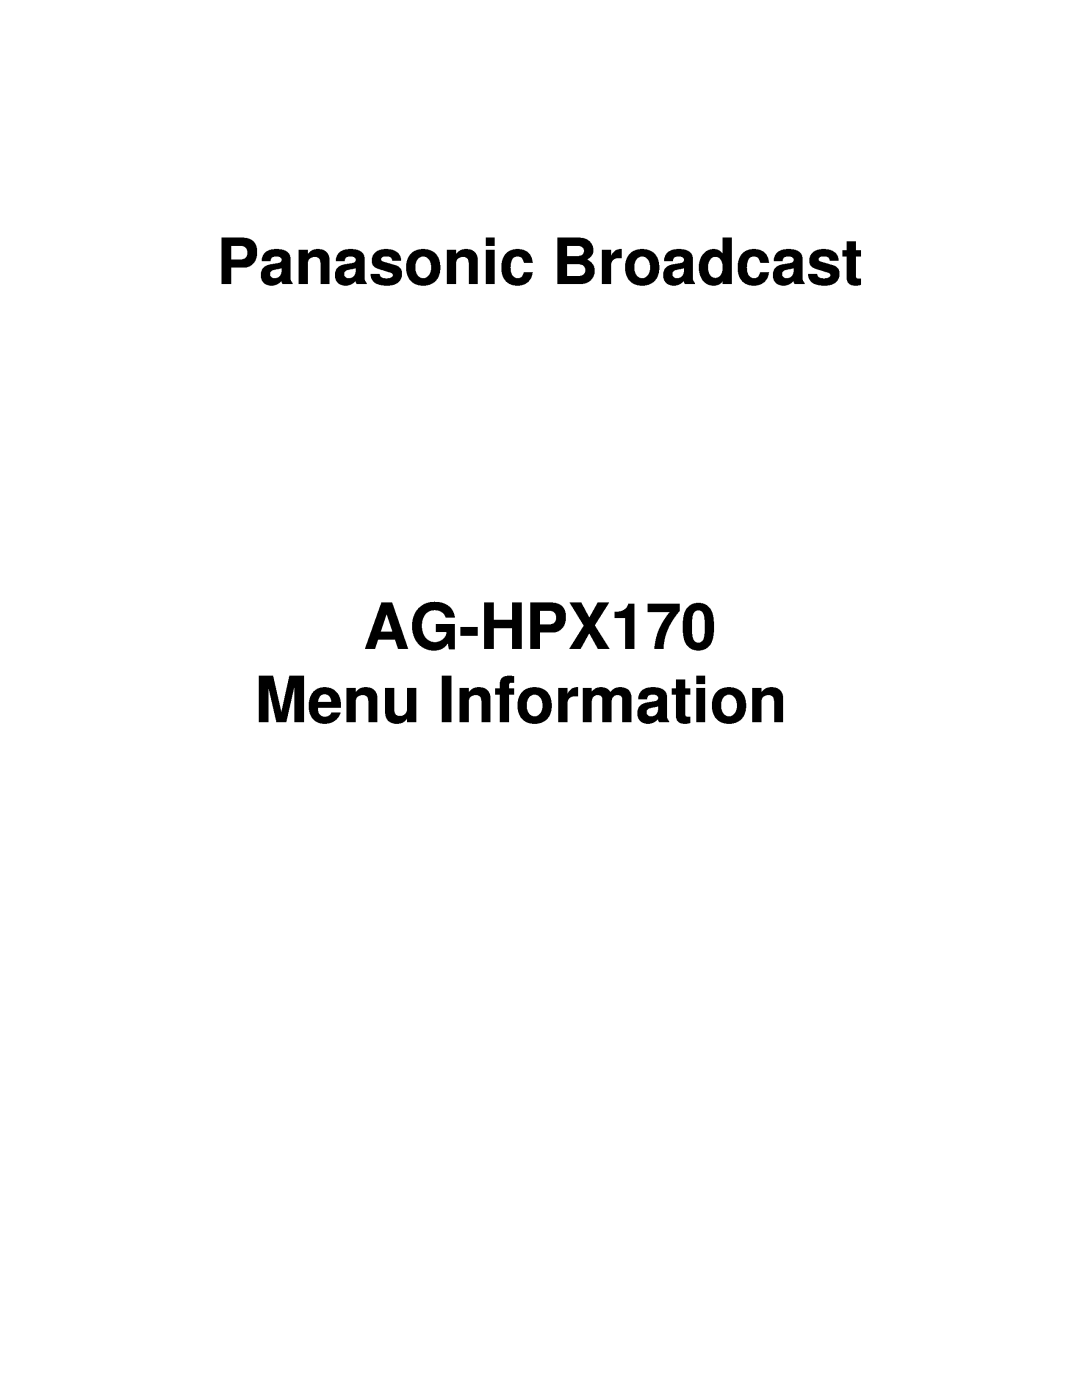 Panasonic manual Panasonic Broadcast, AG-HPX170 Menu Information 